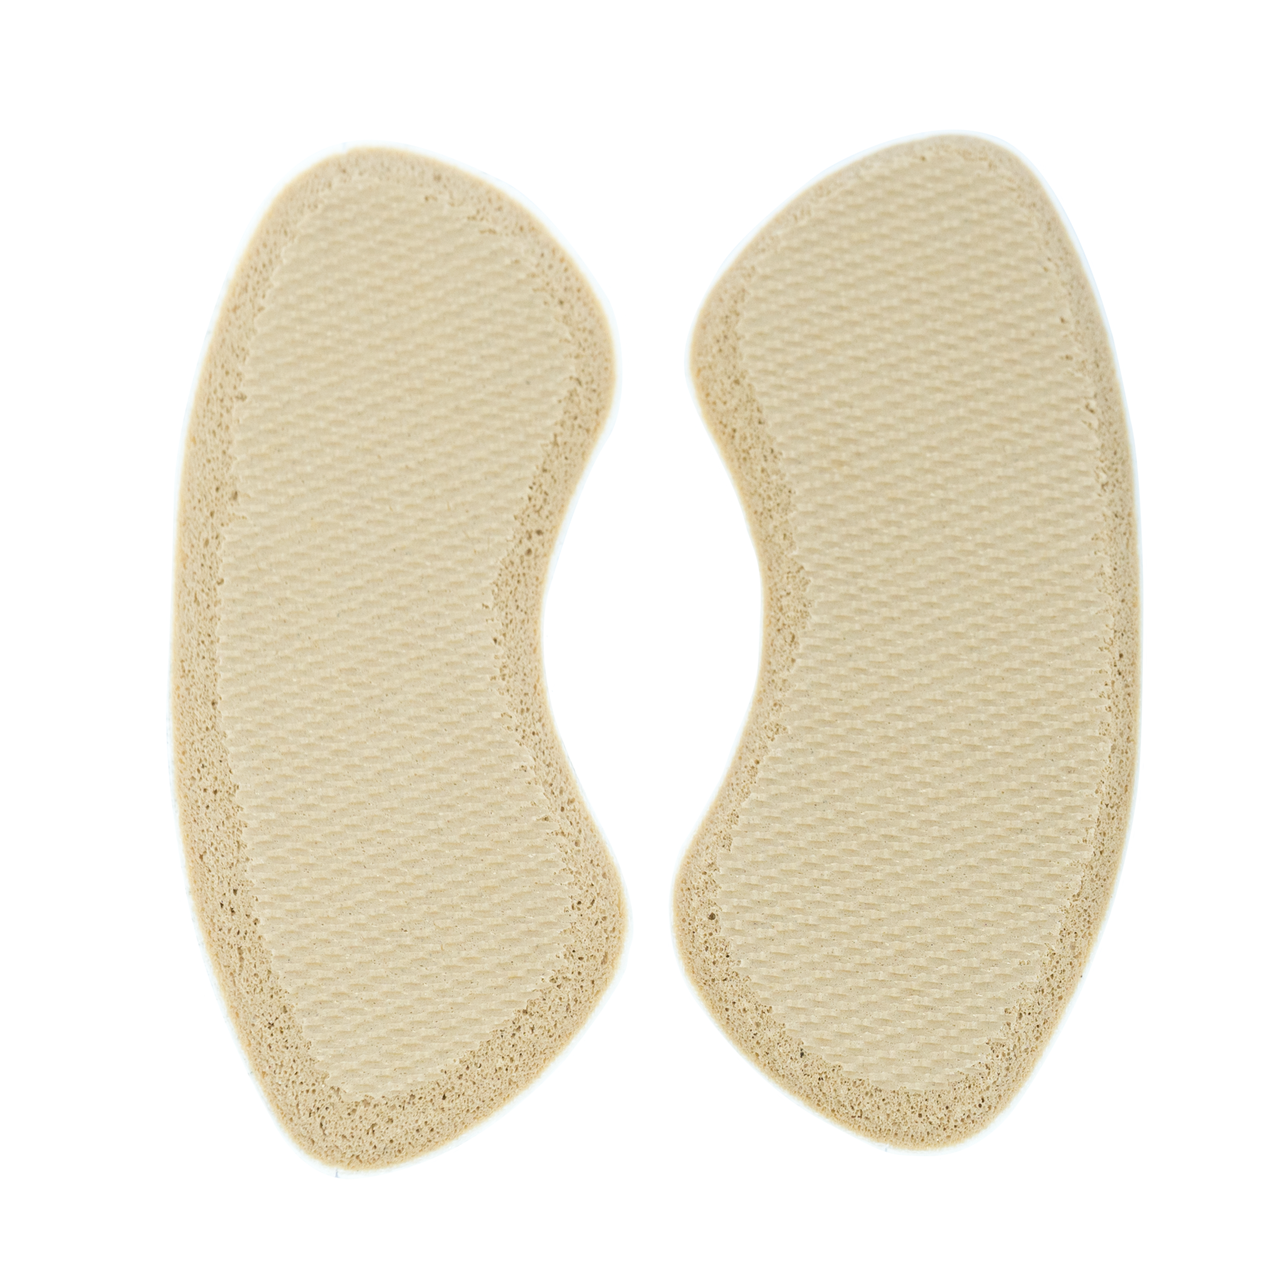 ZUVILIKA Heel Grips Liner Cushions Inserts for Loose Shoes, Heel Pads Snugs  for Shoe Heel Support - Buy ZUVILIKA Heel Grips Liner Cushions Inserts for  Loose Shoes, Heel Pads Snugs for Shoe